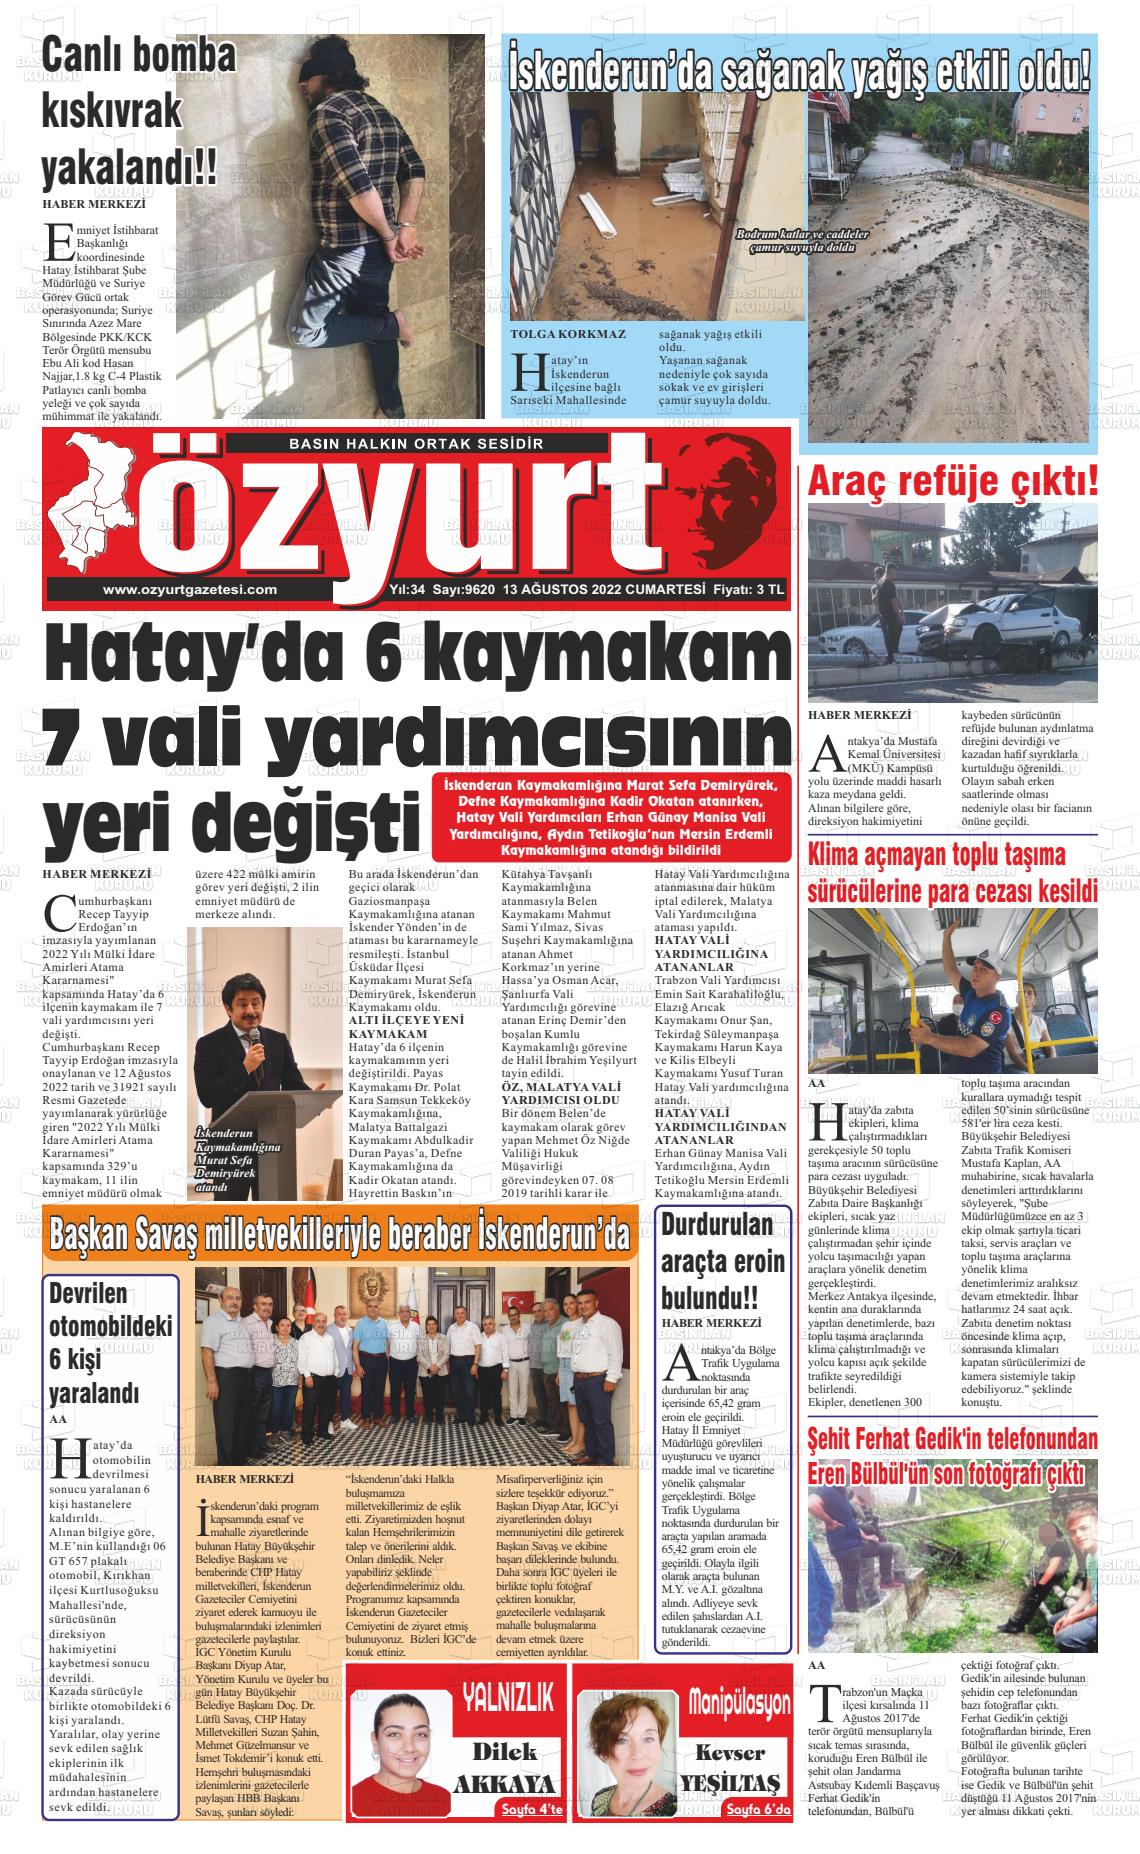 13 Ağustos 2022 Özyurt Gazete Manşeti